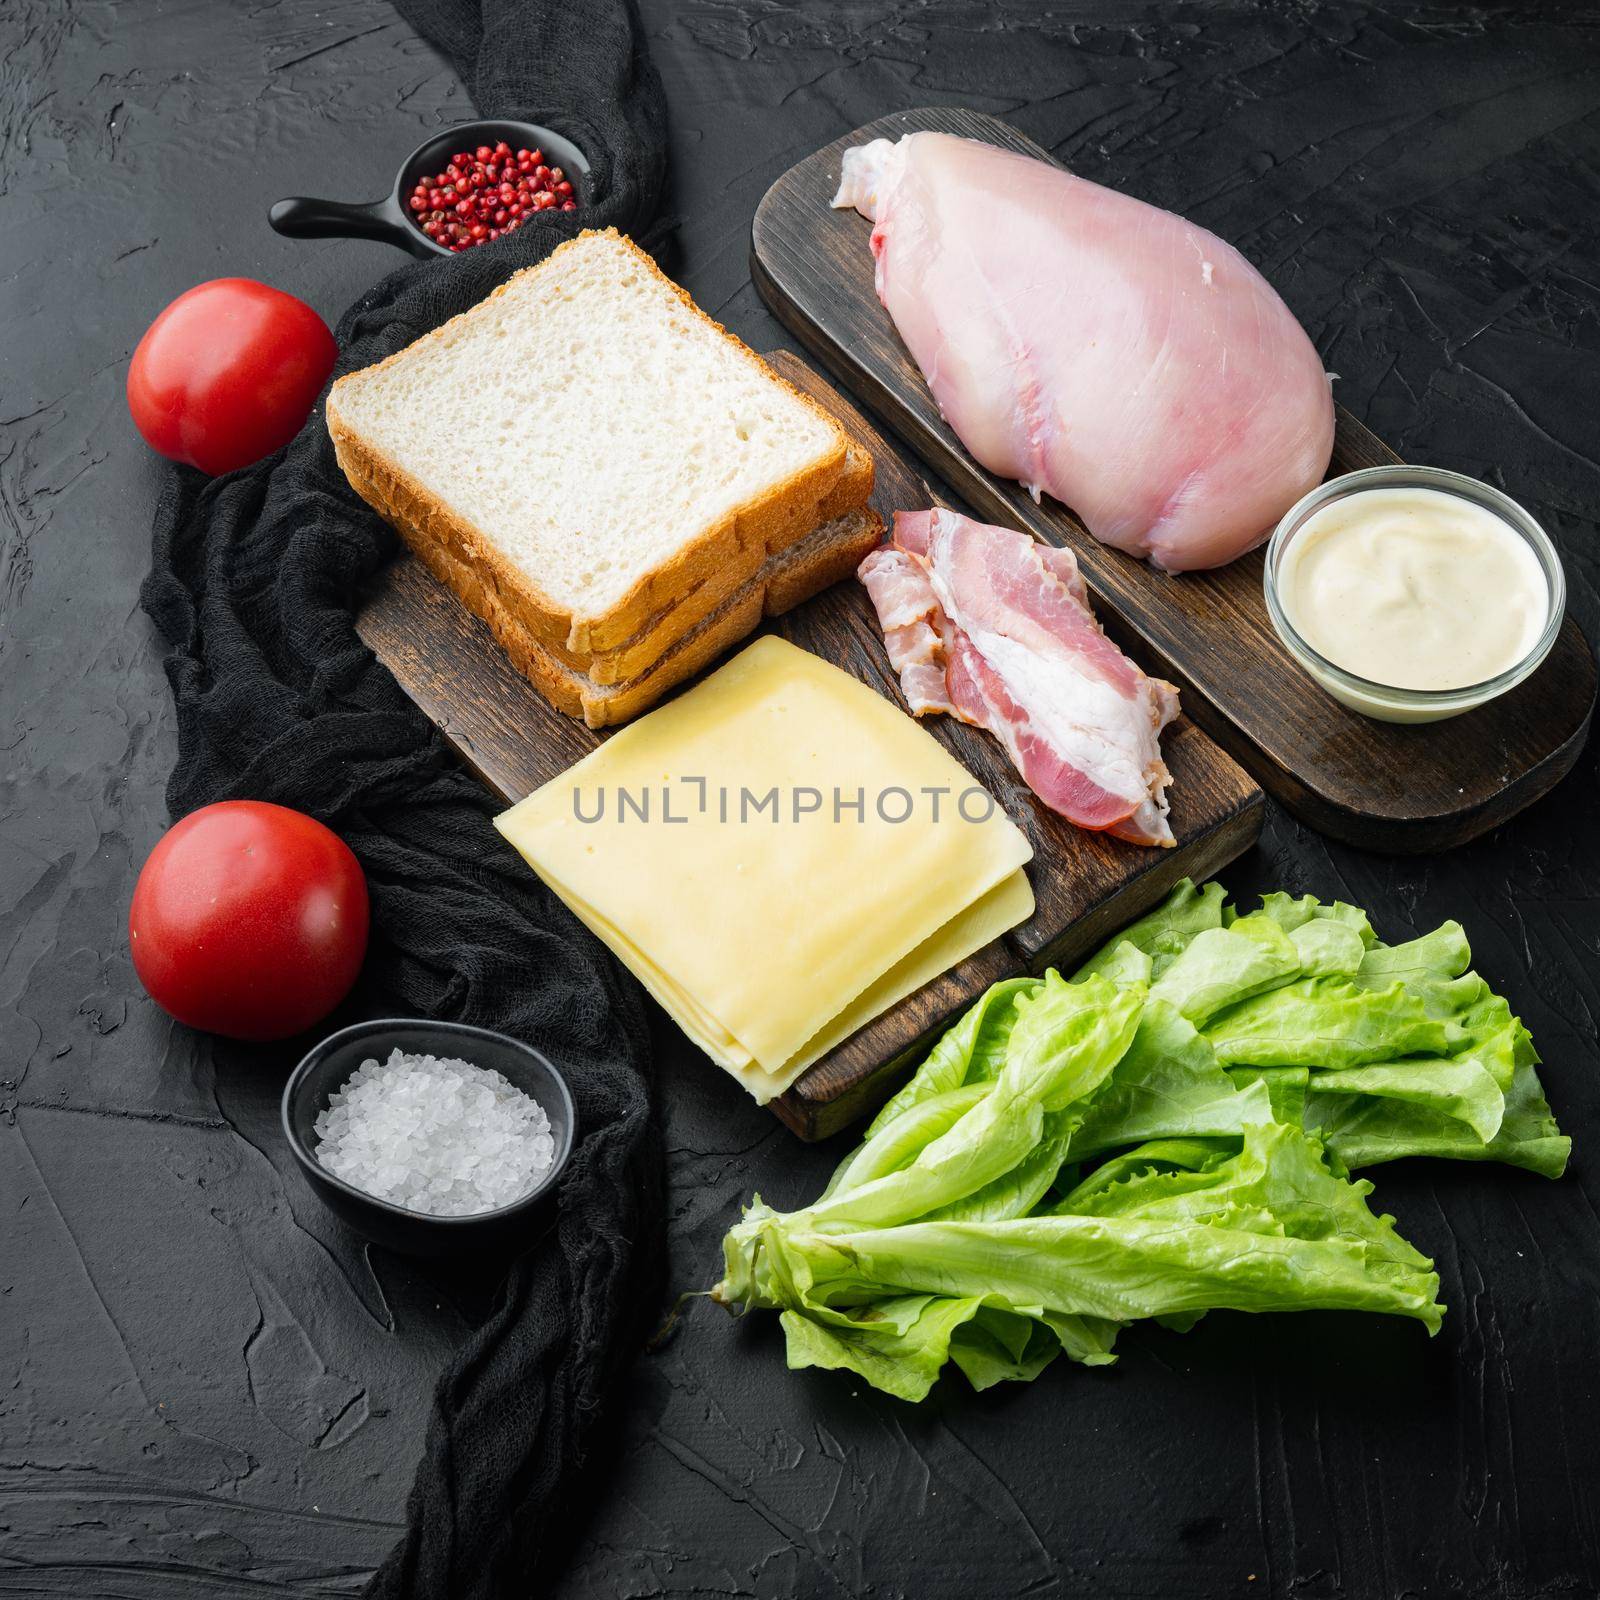 Fresh ingredients for tasty sandwich, on black background by Ilianesolenyi